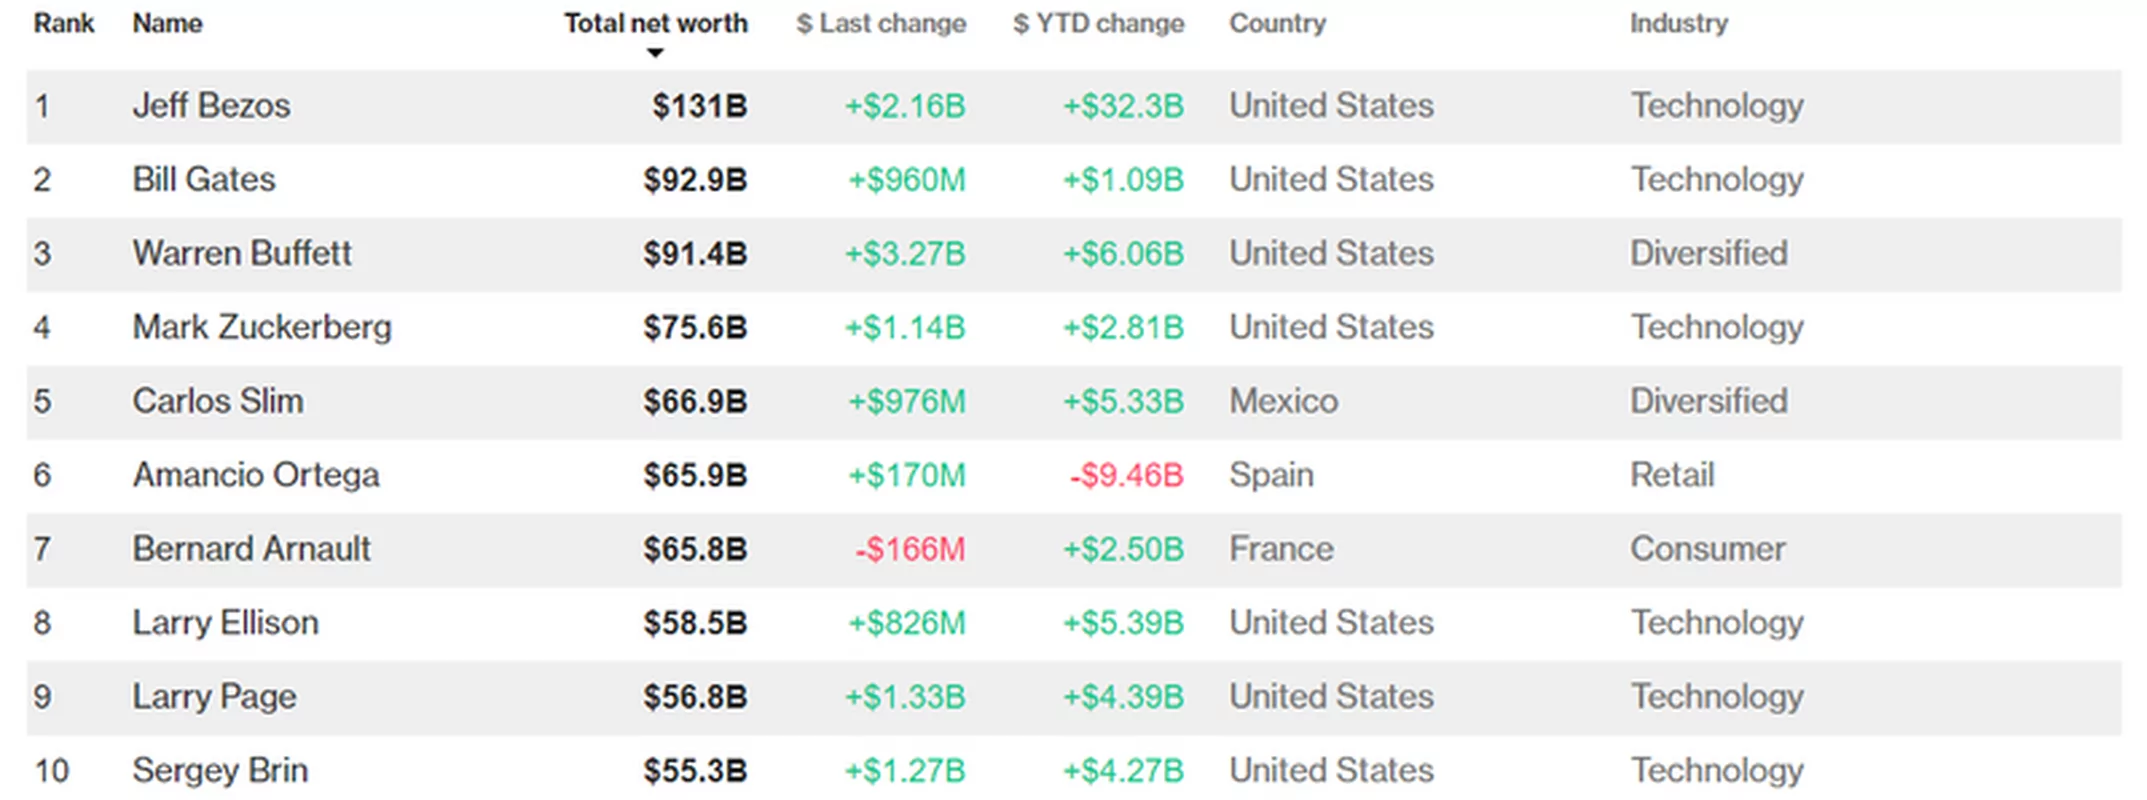 Najbogatsi ludzie świata - Bloomberg Billionaires Index